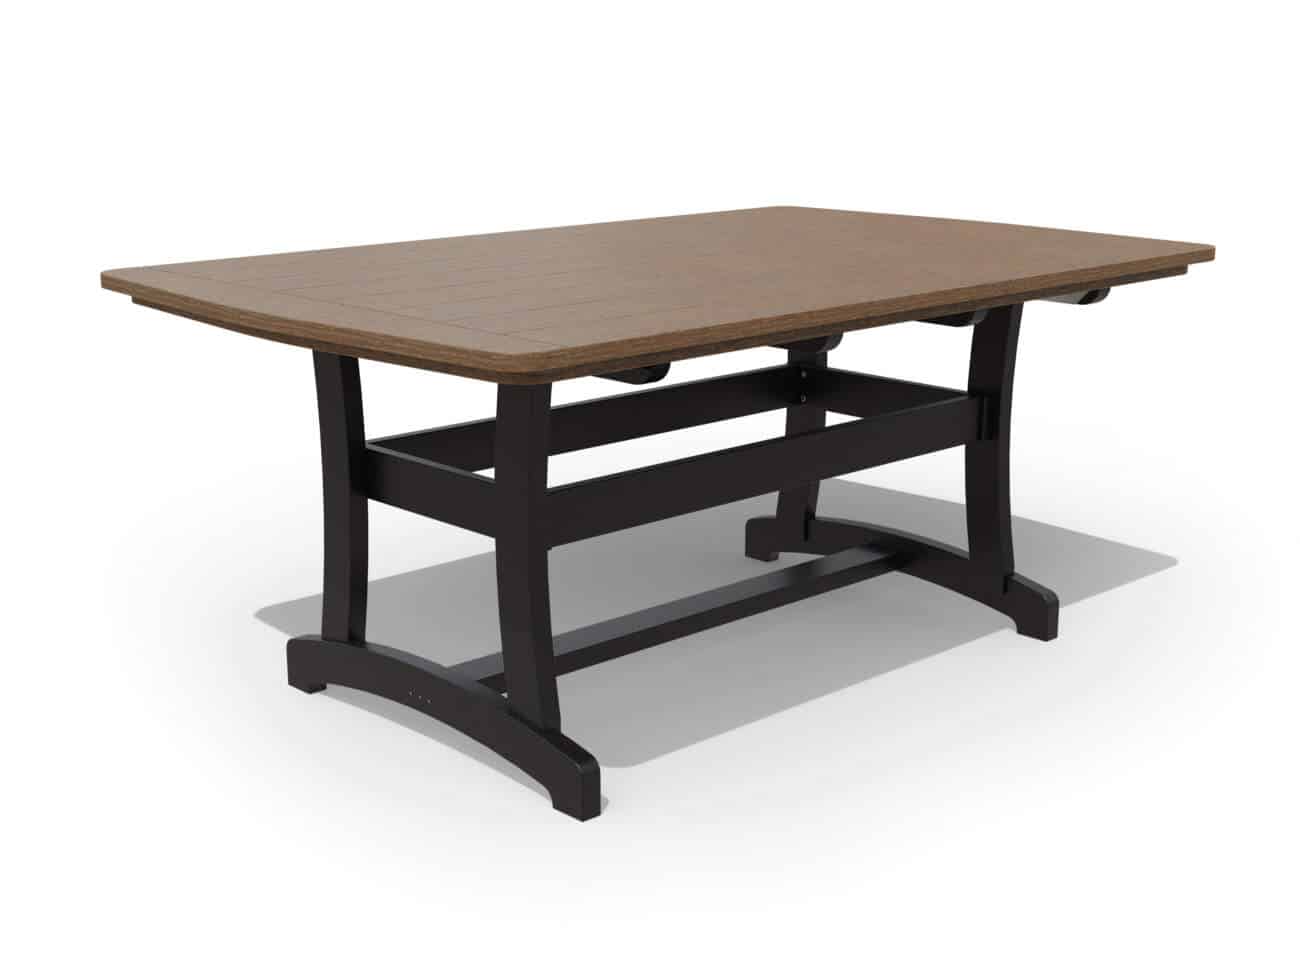 4x6 Legacy Table poly wood grain